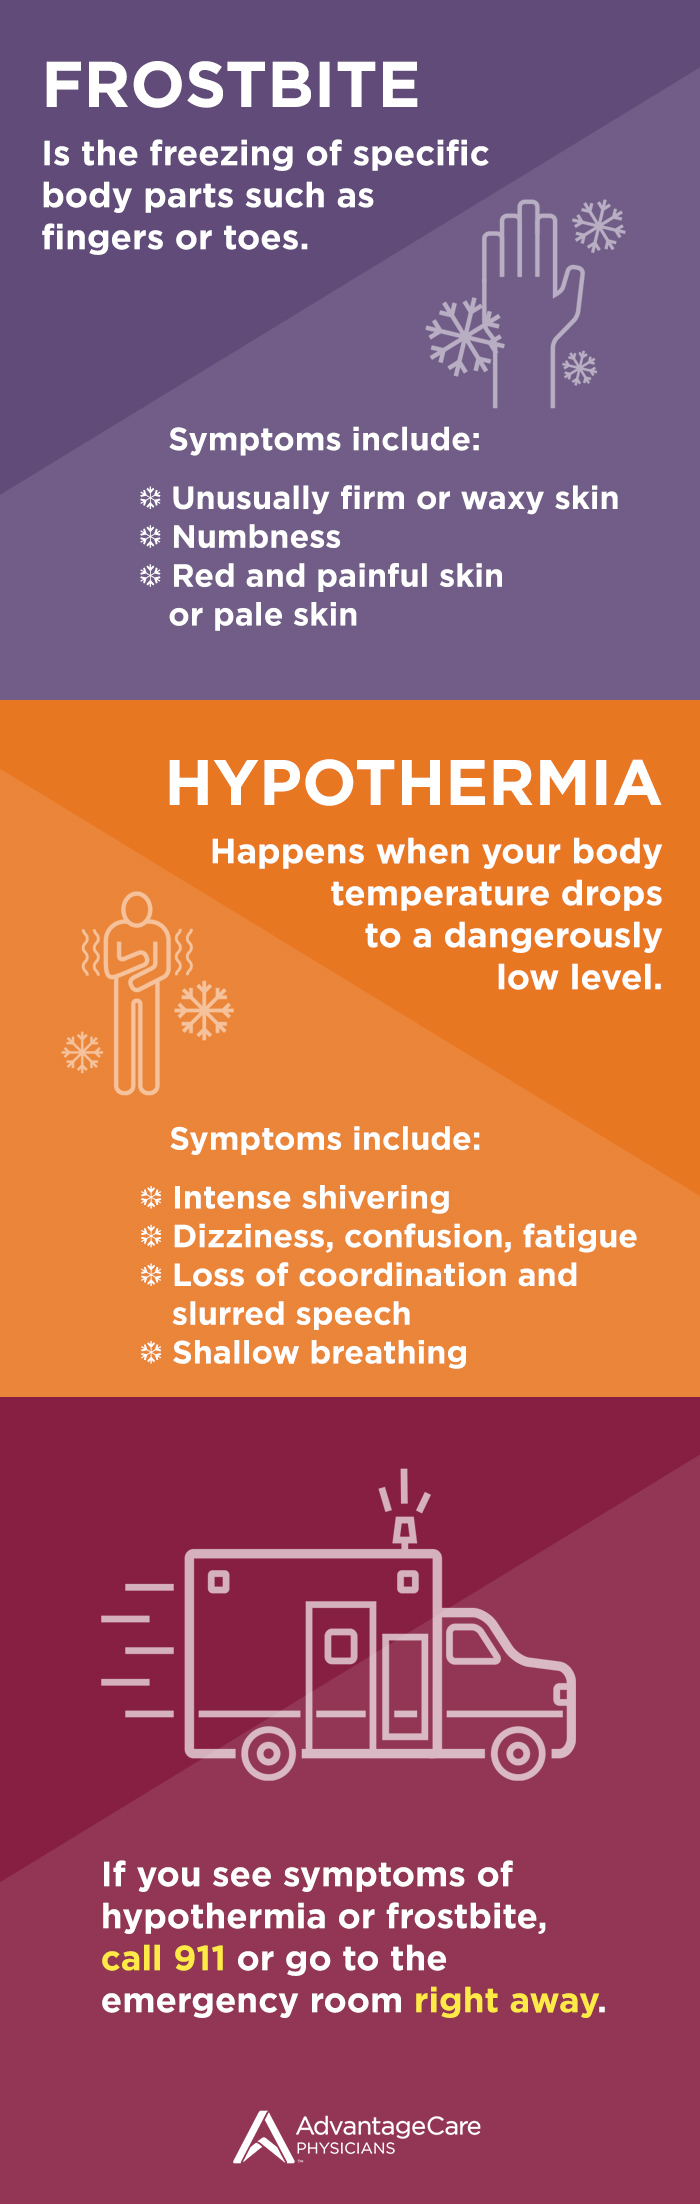 frostbite vs hypothermia